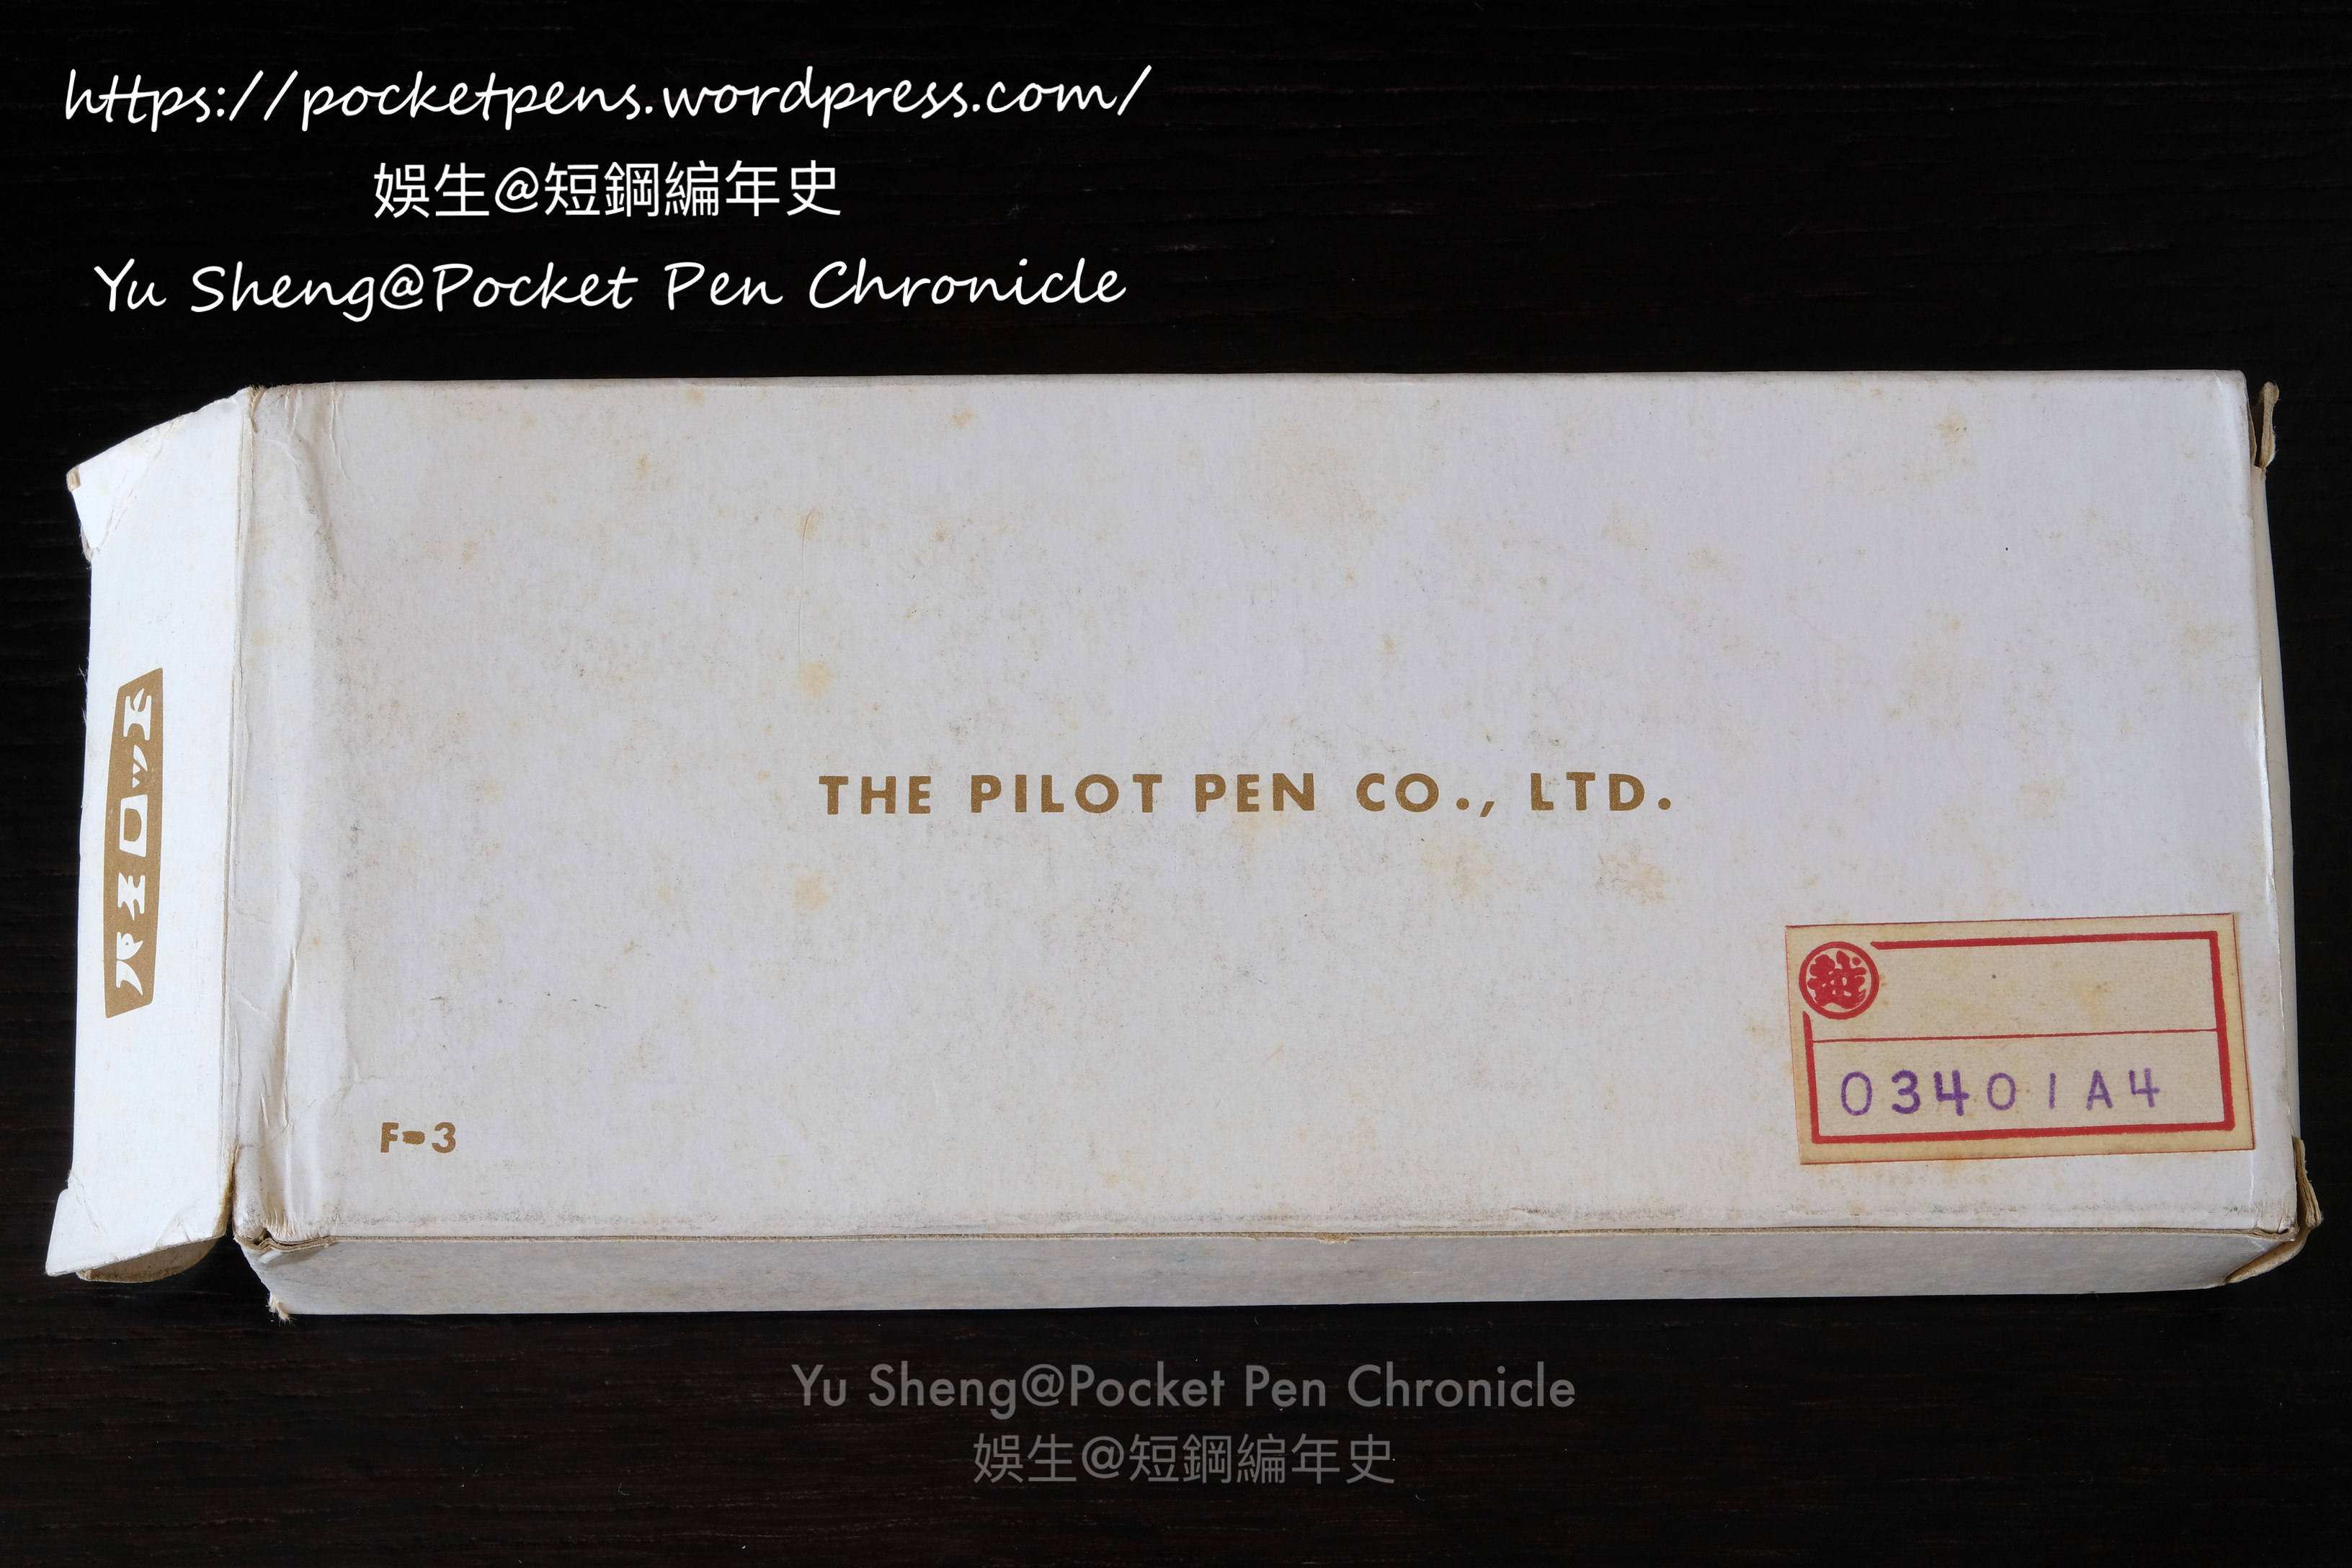 Outer packing of Pilot Elite S pocket pen 2